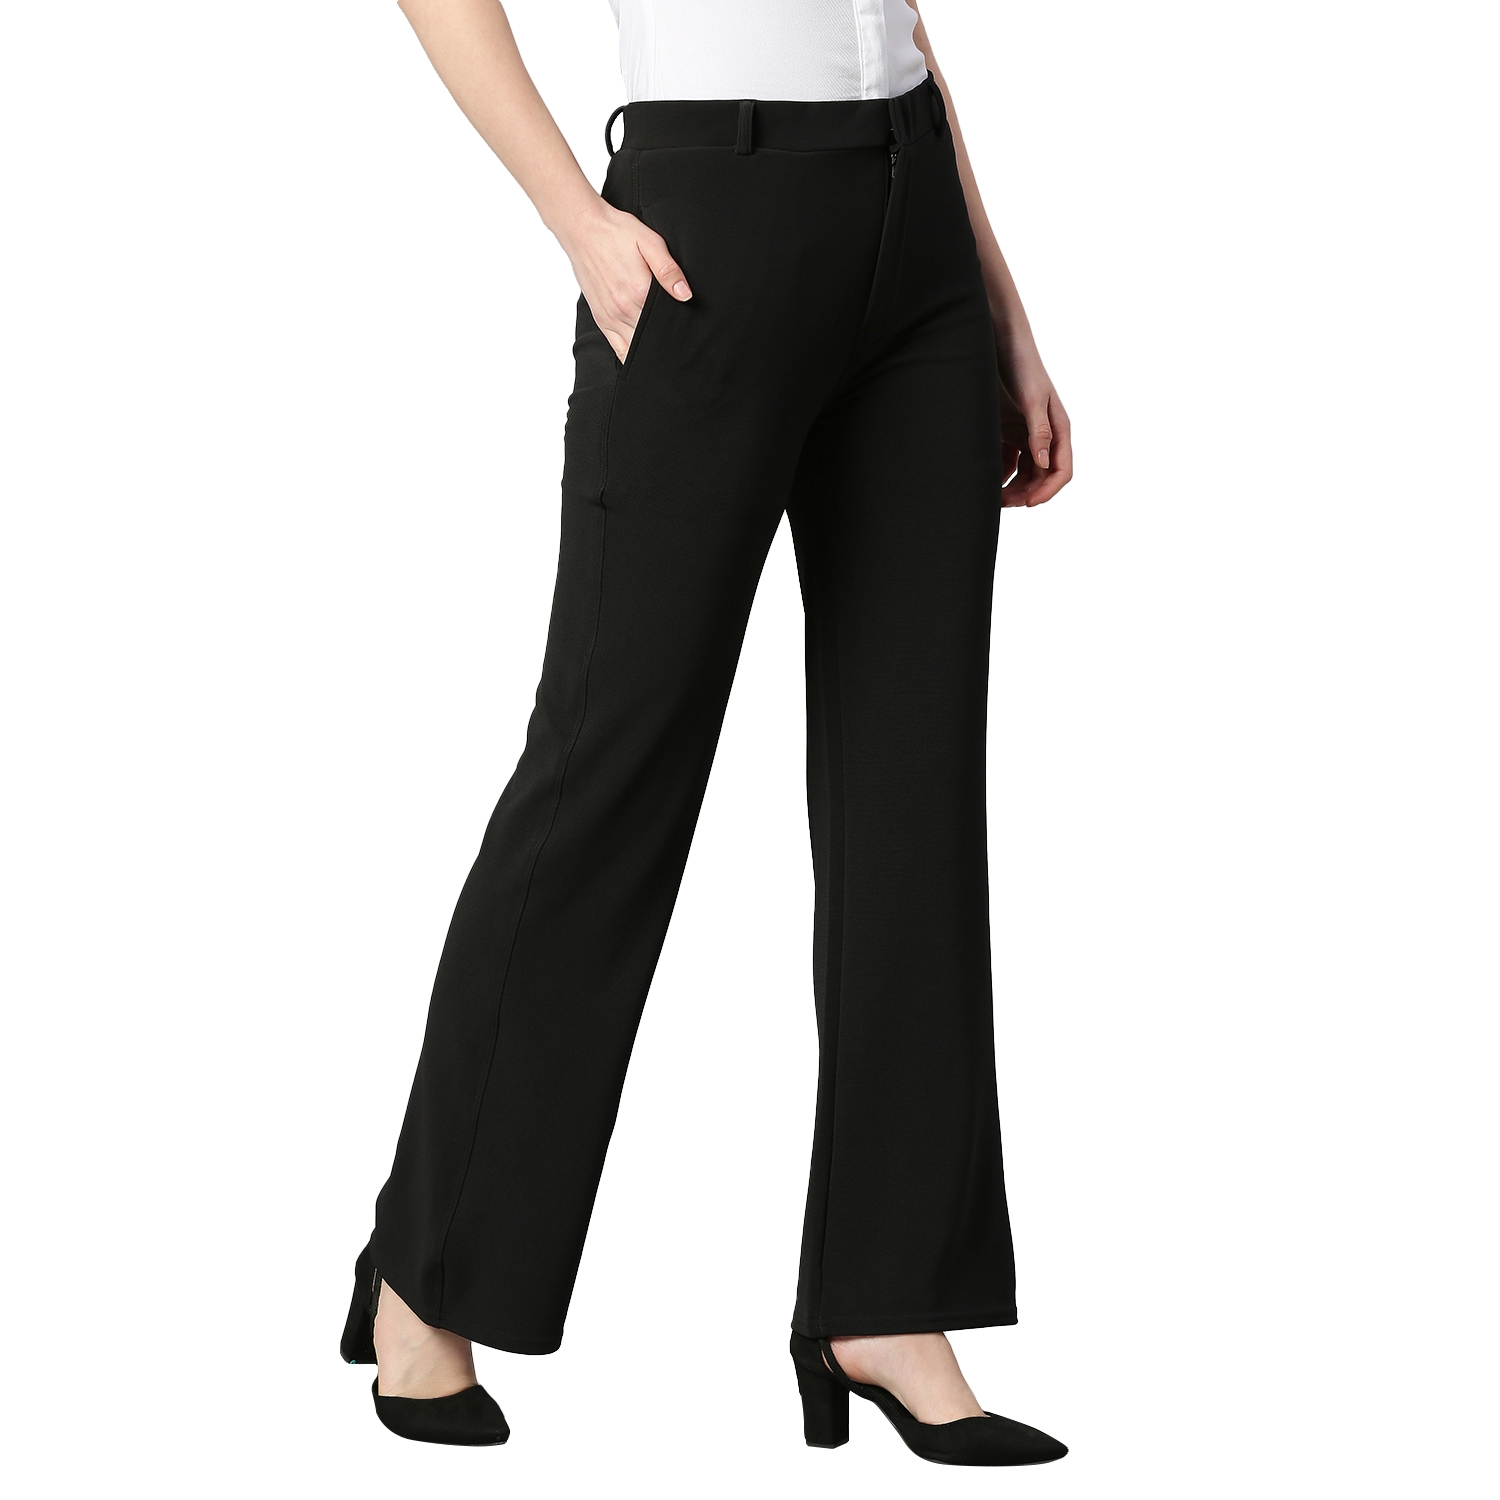 Buy Volume Zero Men's Cotton Lycra Trousers(Cream)| Trouser | at Amazon.in